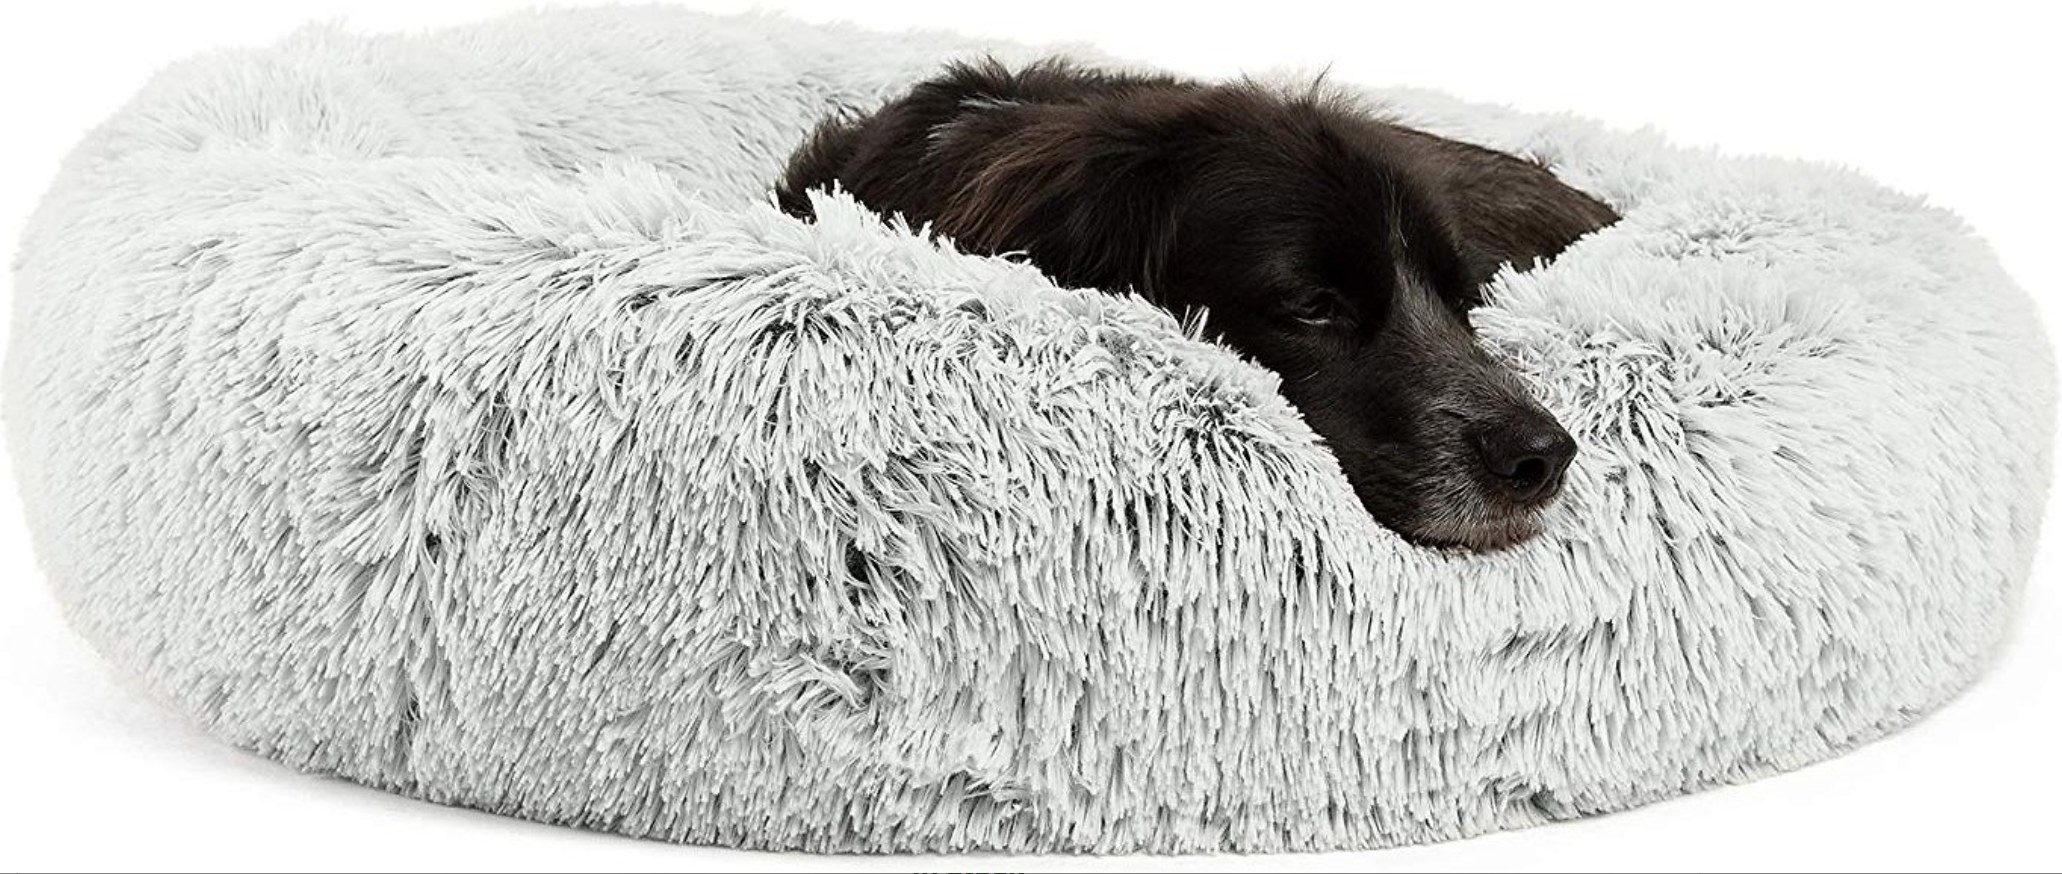 Dark brown dog in a fluffy gray bed